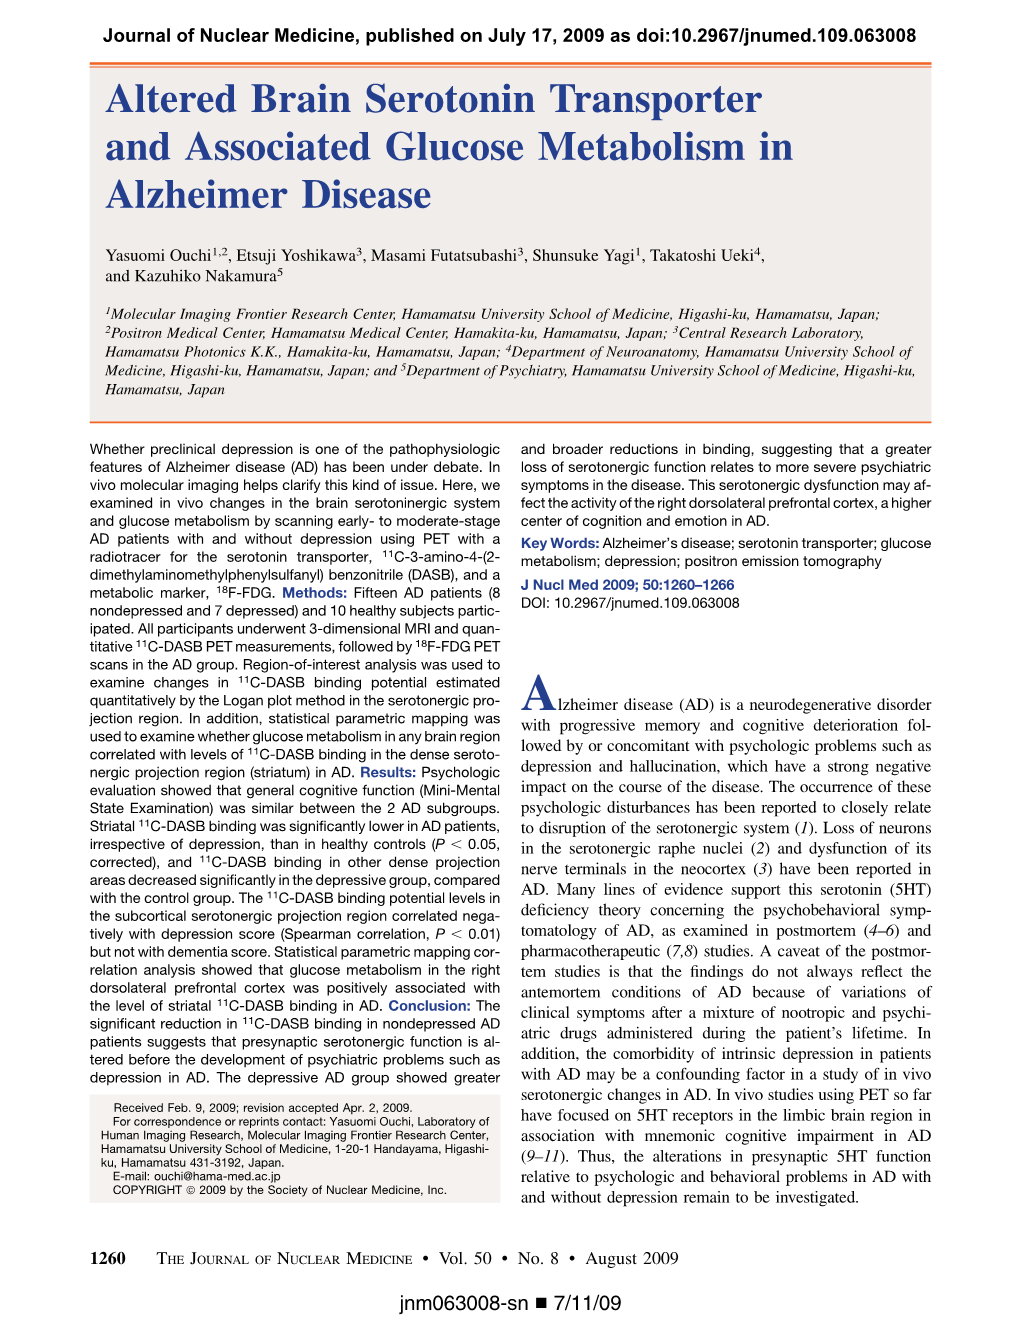 Altered Brain Serotonin Transporter and Associated Glucose Metabolism in Alzheimer Disease